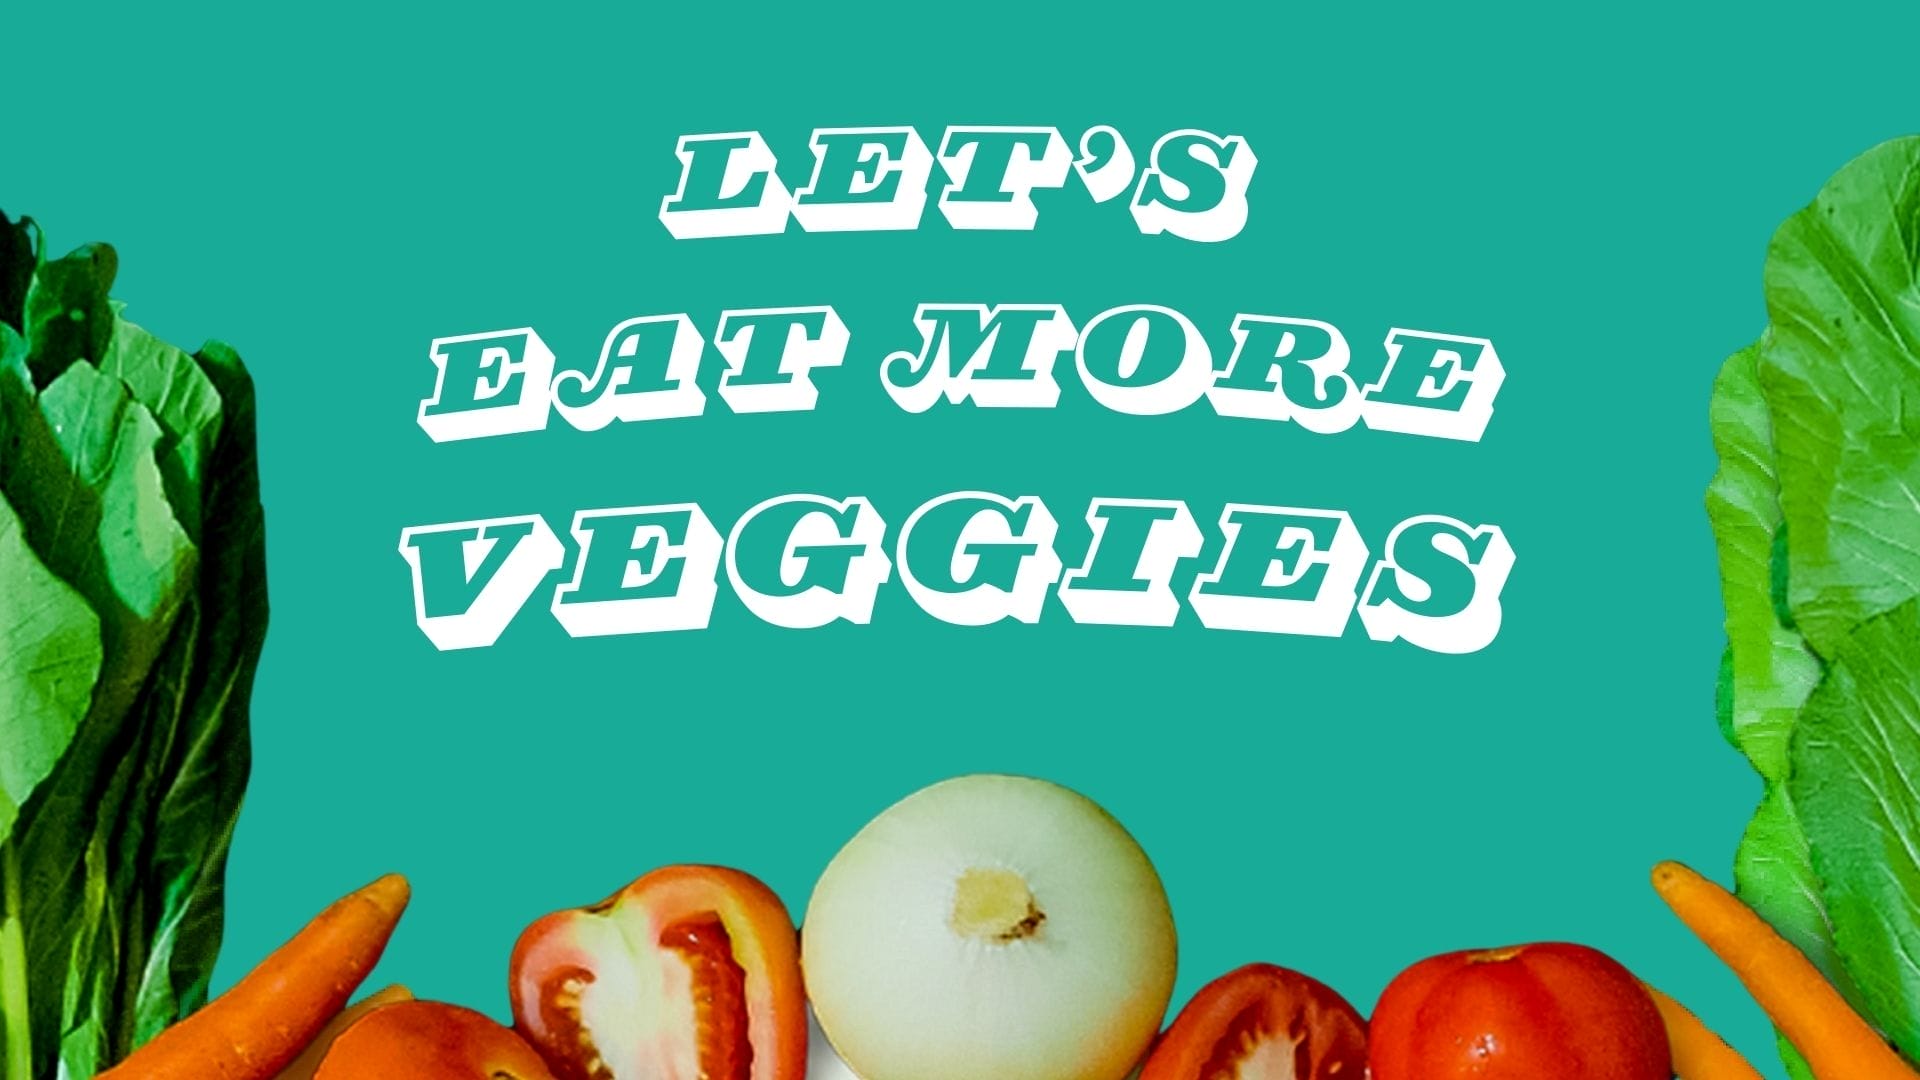 text banner with veggies around edges